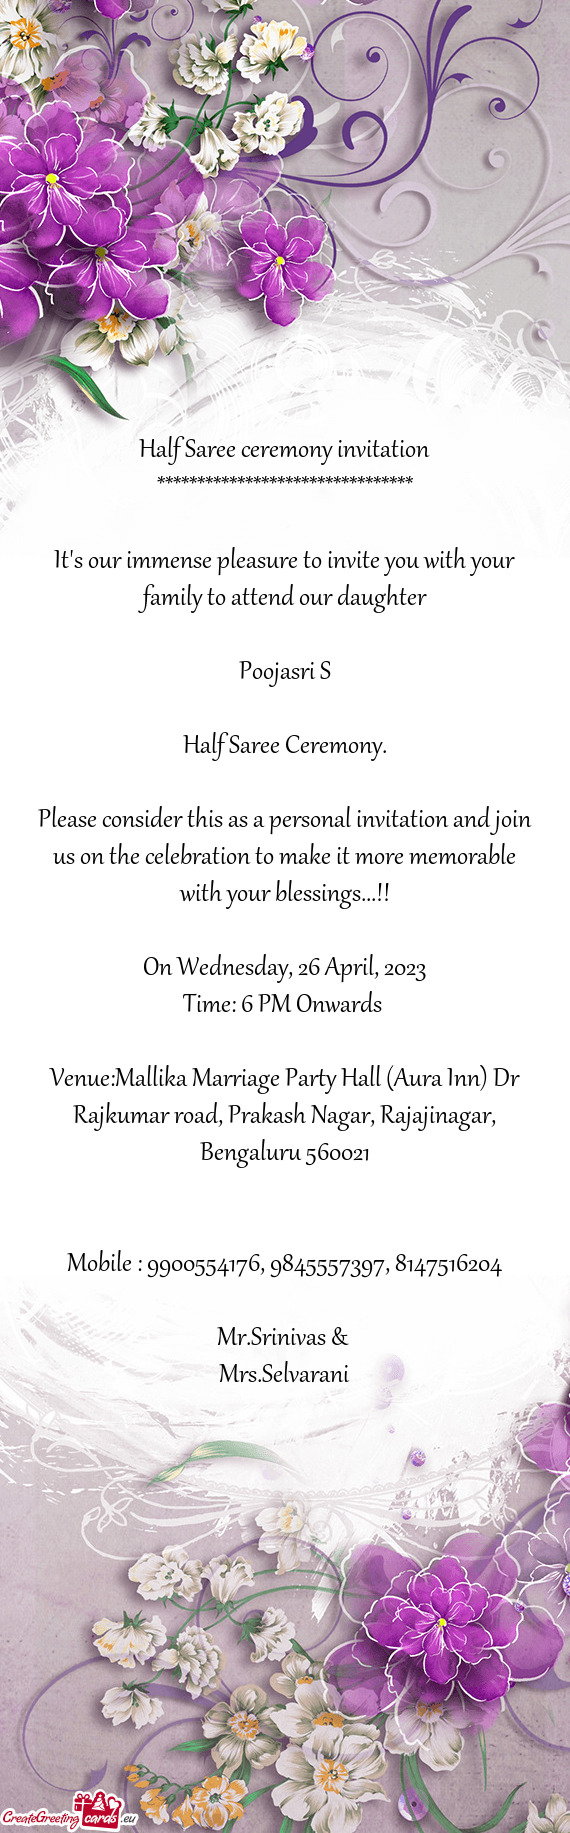 Venue:Mallika Marriage Party Hall (Aura Inn) Dr Rajkumar road, Prakash Nagar, Rajajinagar, Bengaluru